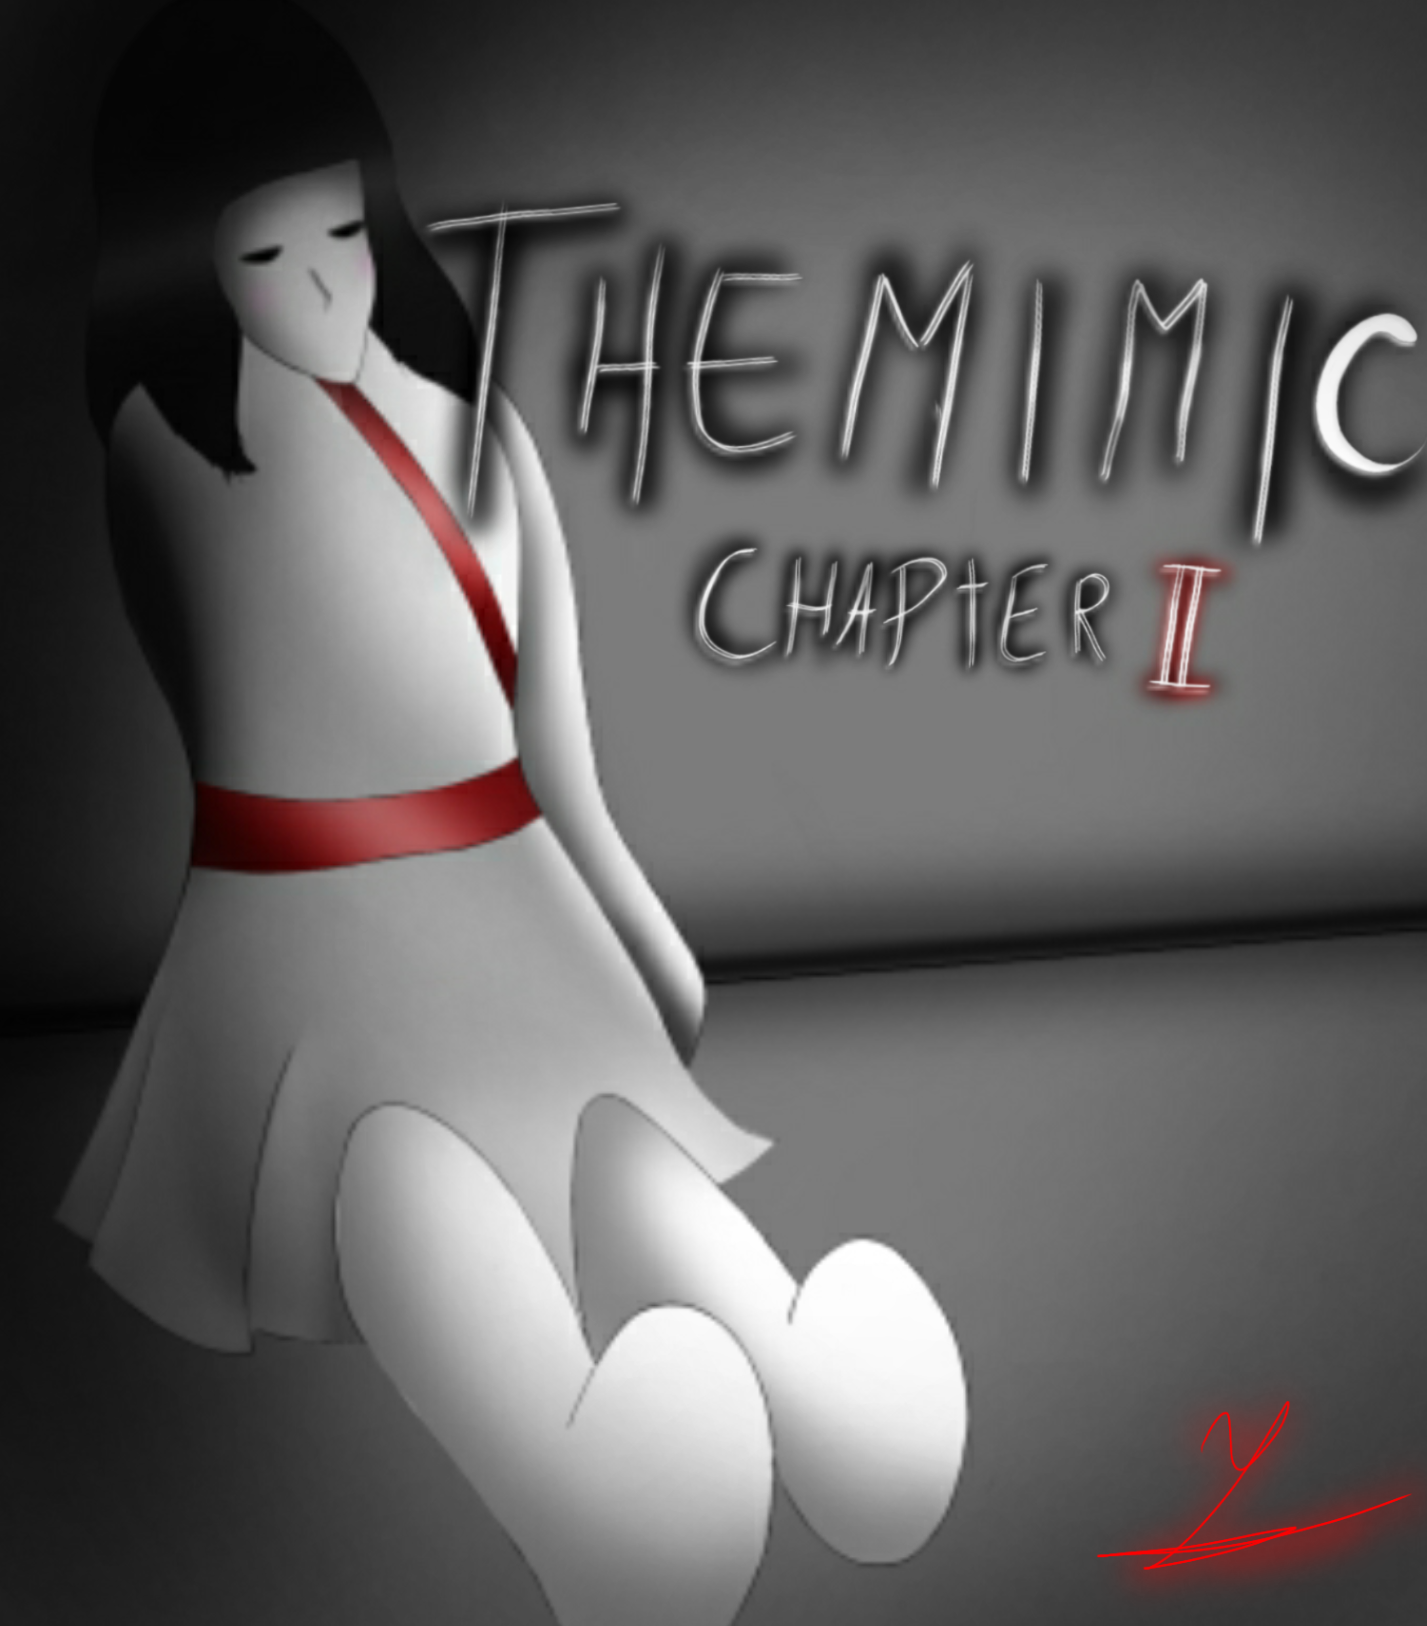 The Mimic Chapter 1 - Hiachi Maze